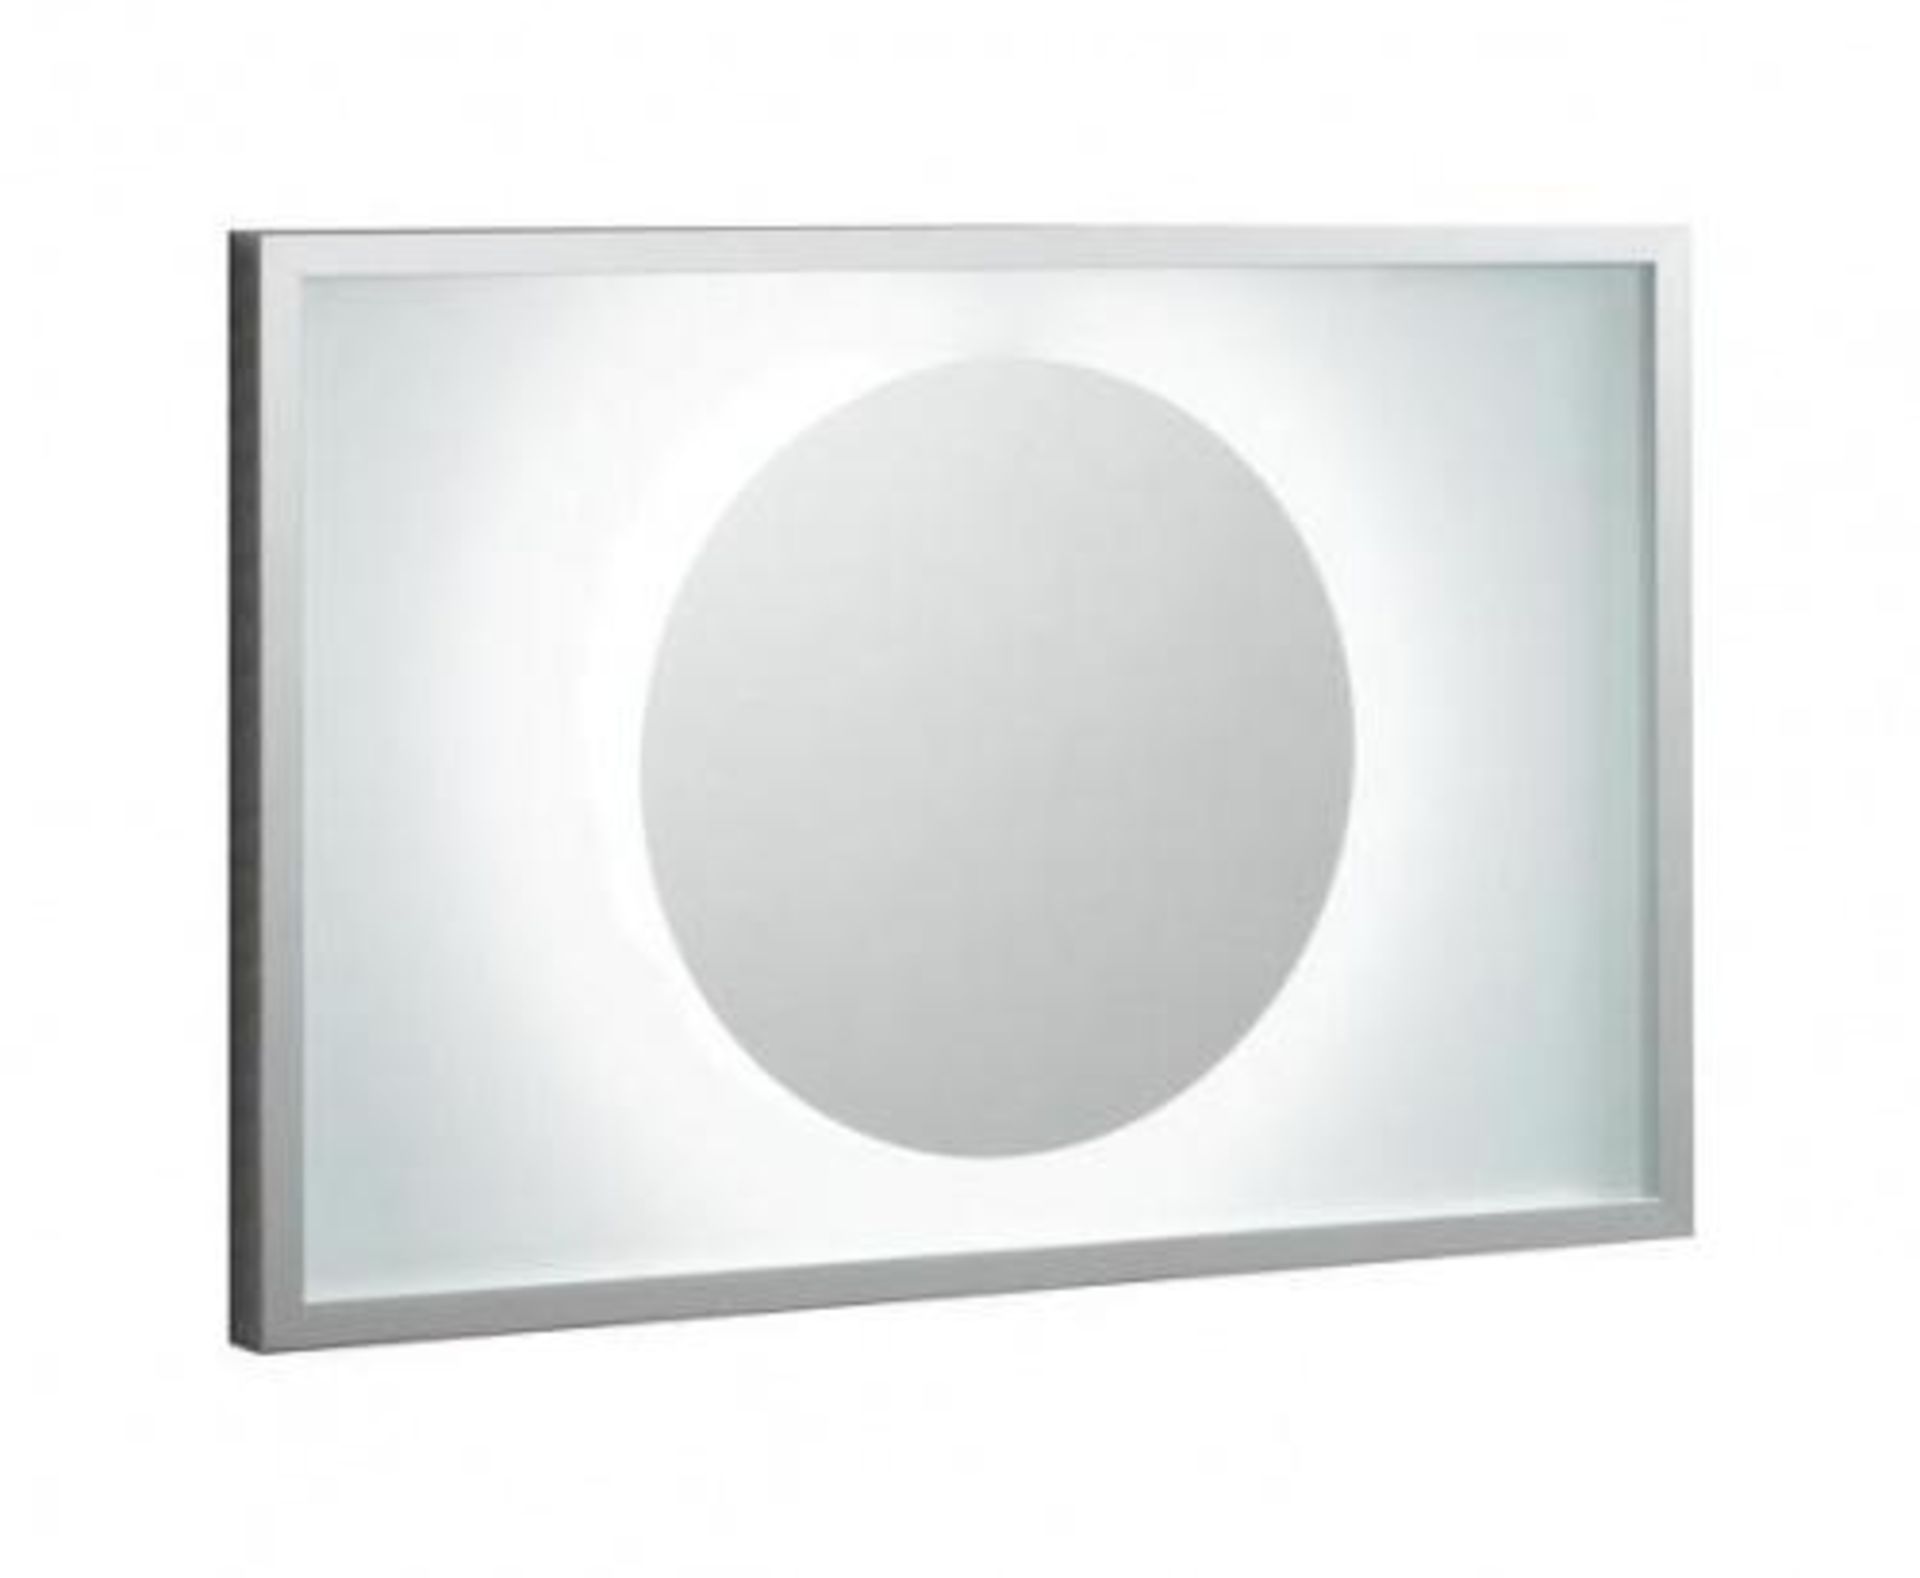 (RR32) KERAMAG 600x900mm Presciosa ll Illuminated Mirror. RRP £554.99 The aesthetics of stripp... - Image 4 of 4